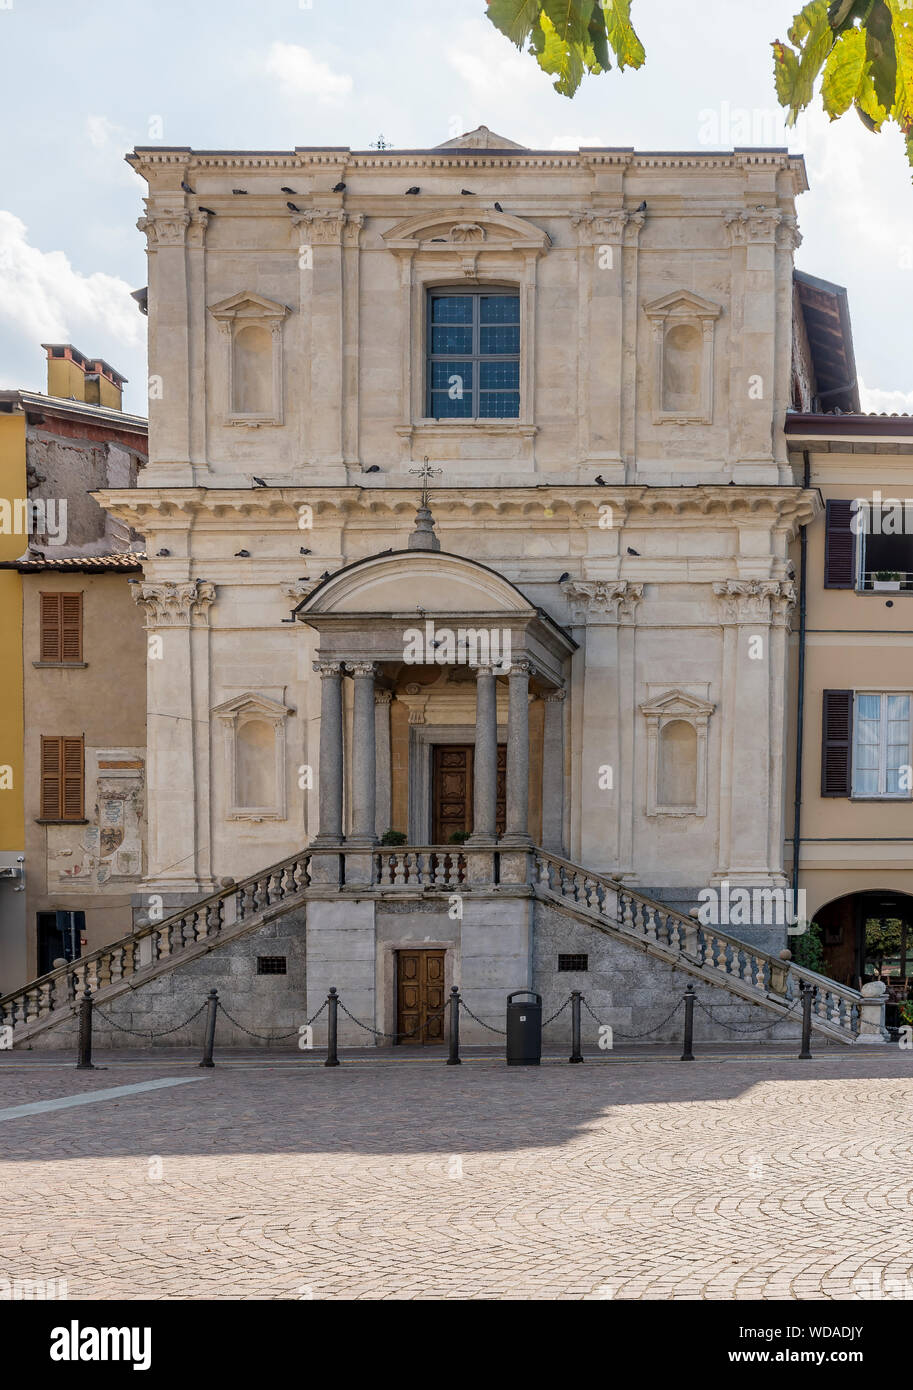 The beautiful facade of the Church of Santa Marta or Santa Maria di Loreto di Arona, Italy Stock Photo